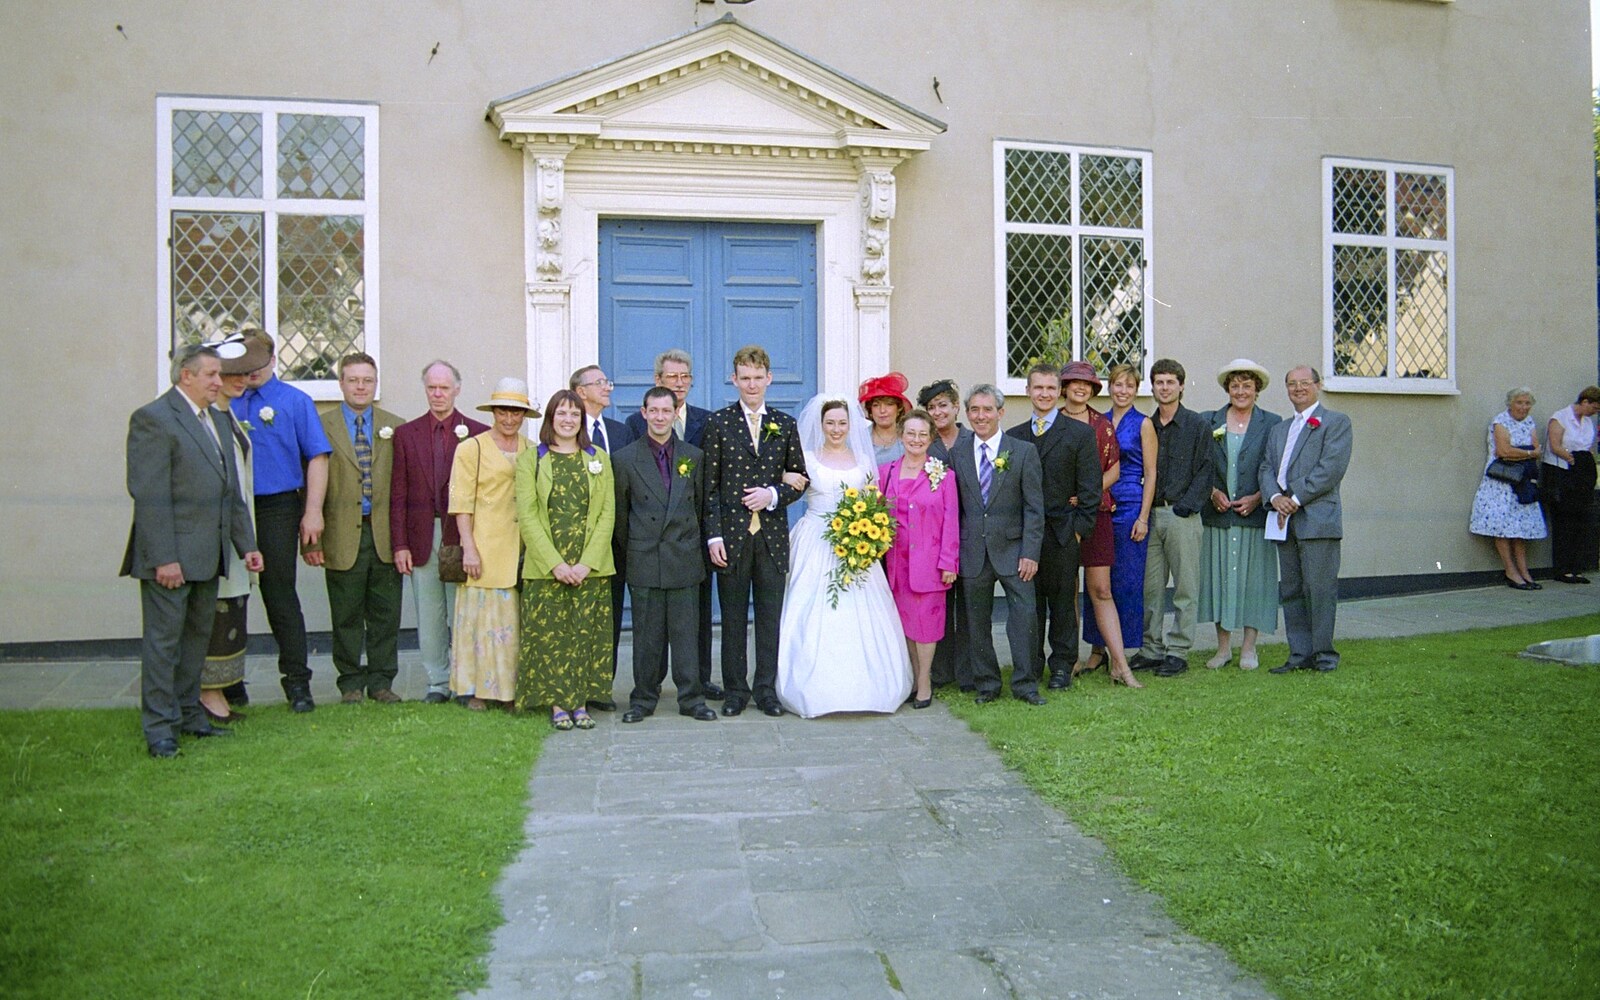 Group wedding shot from Joe and Lesley's CISU Wedding, Ipswich, Suffolk - 30th July 1998